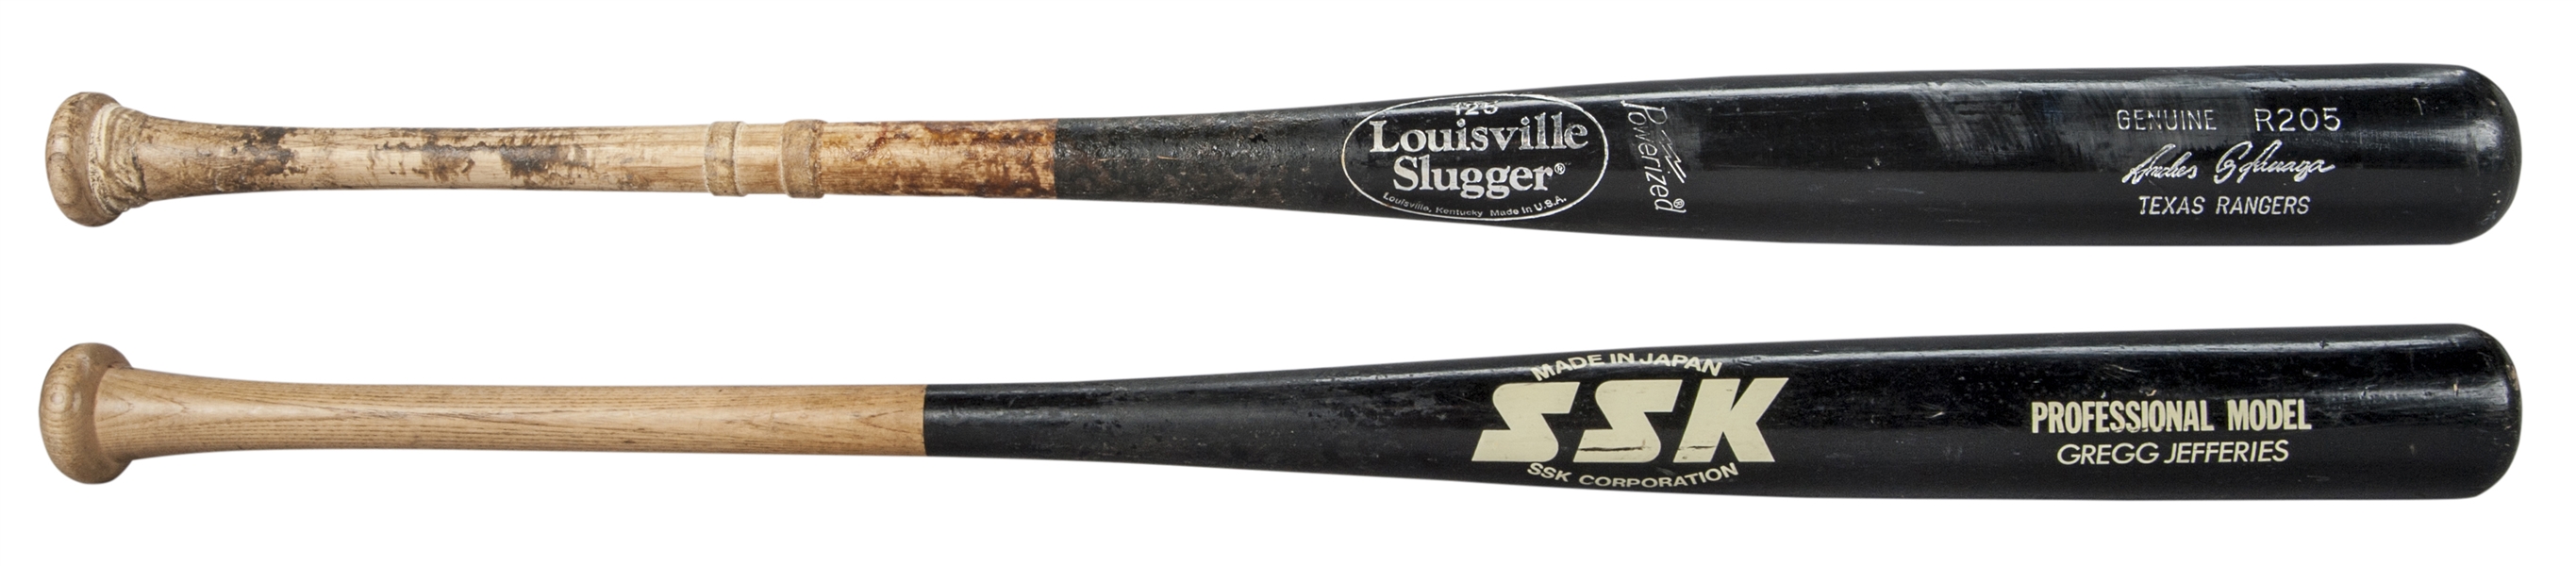 Andres Galarraga Game Used Louisville Slugger Professional Model Baseball  Bat - PSA/DNA 10